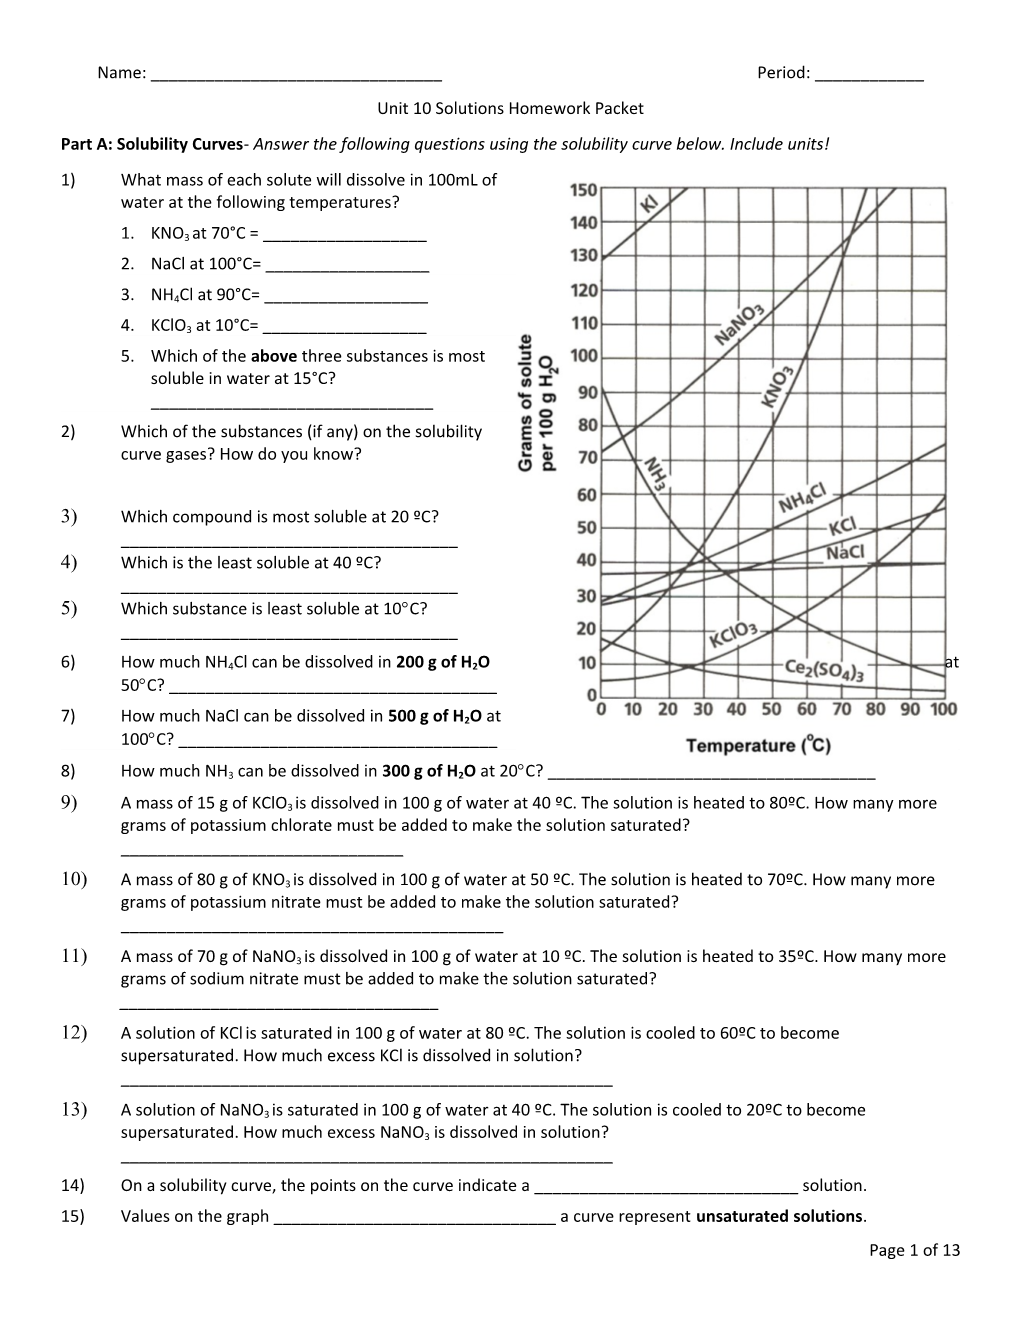 Unit 10 Solutions Homework Packet